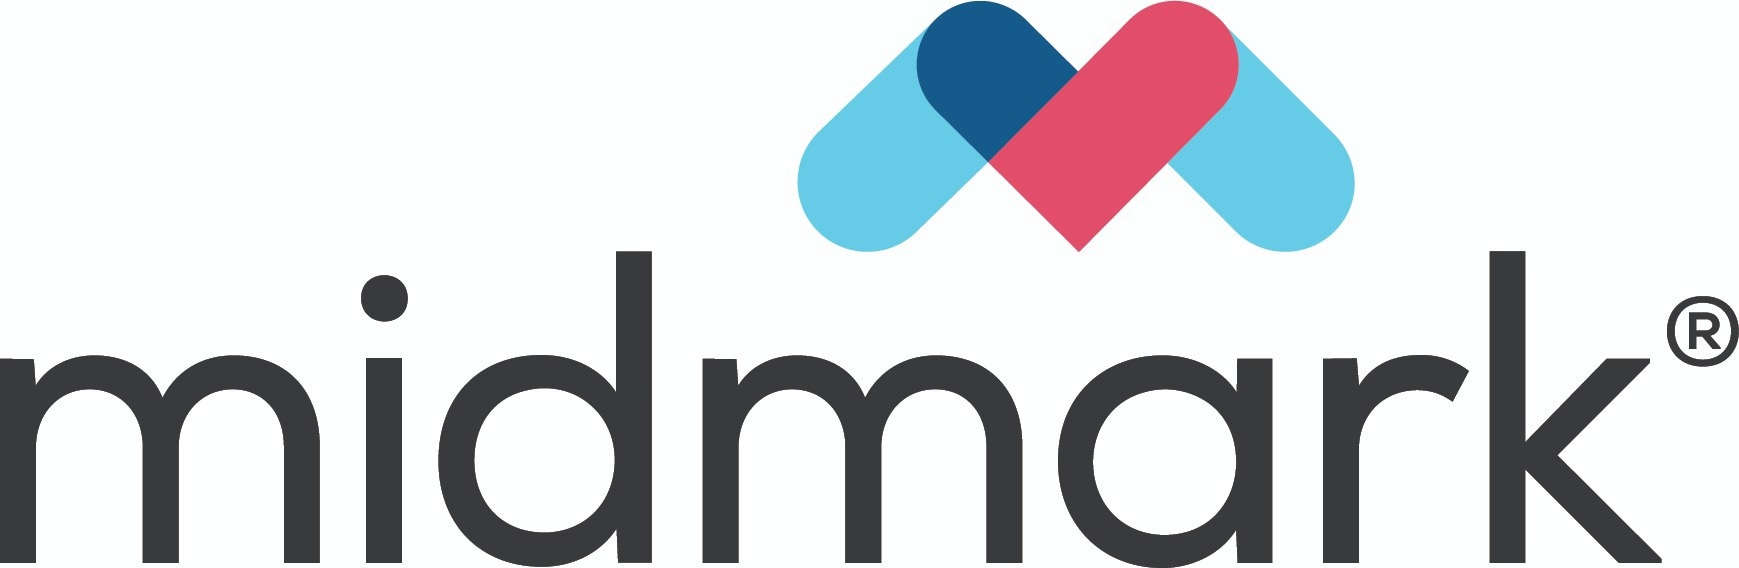 Midmark Corporation logo.